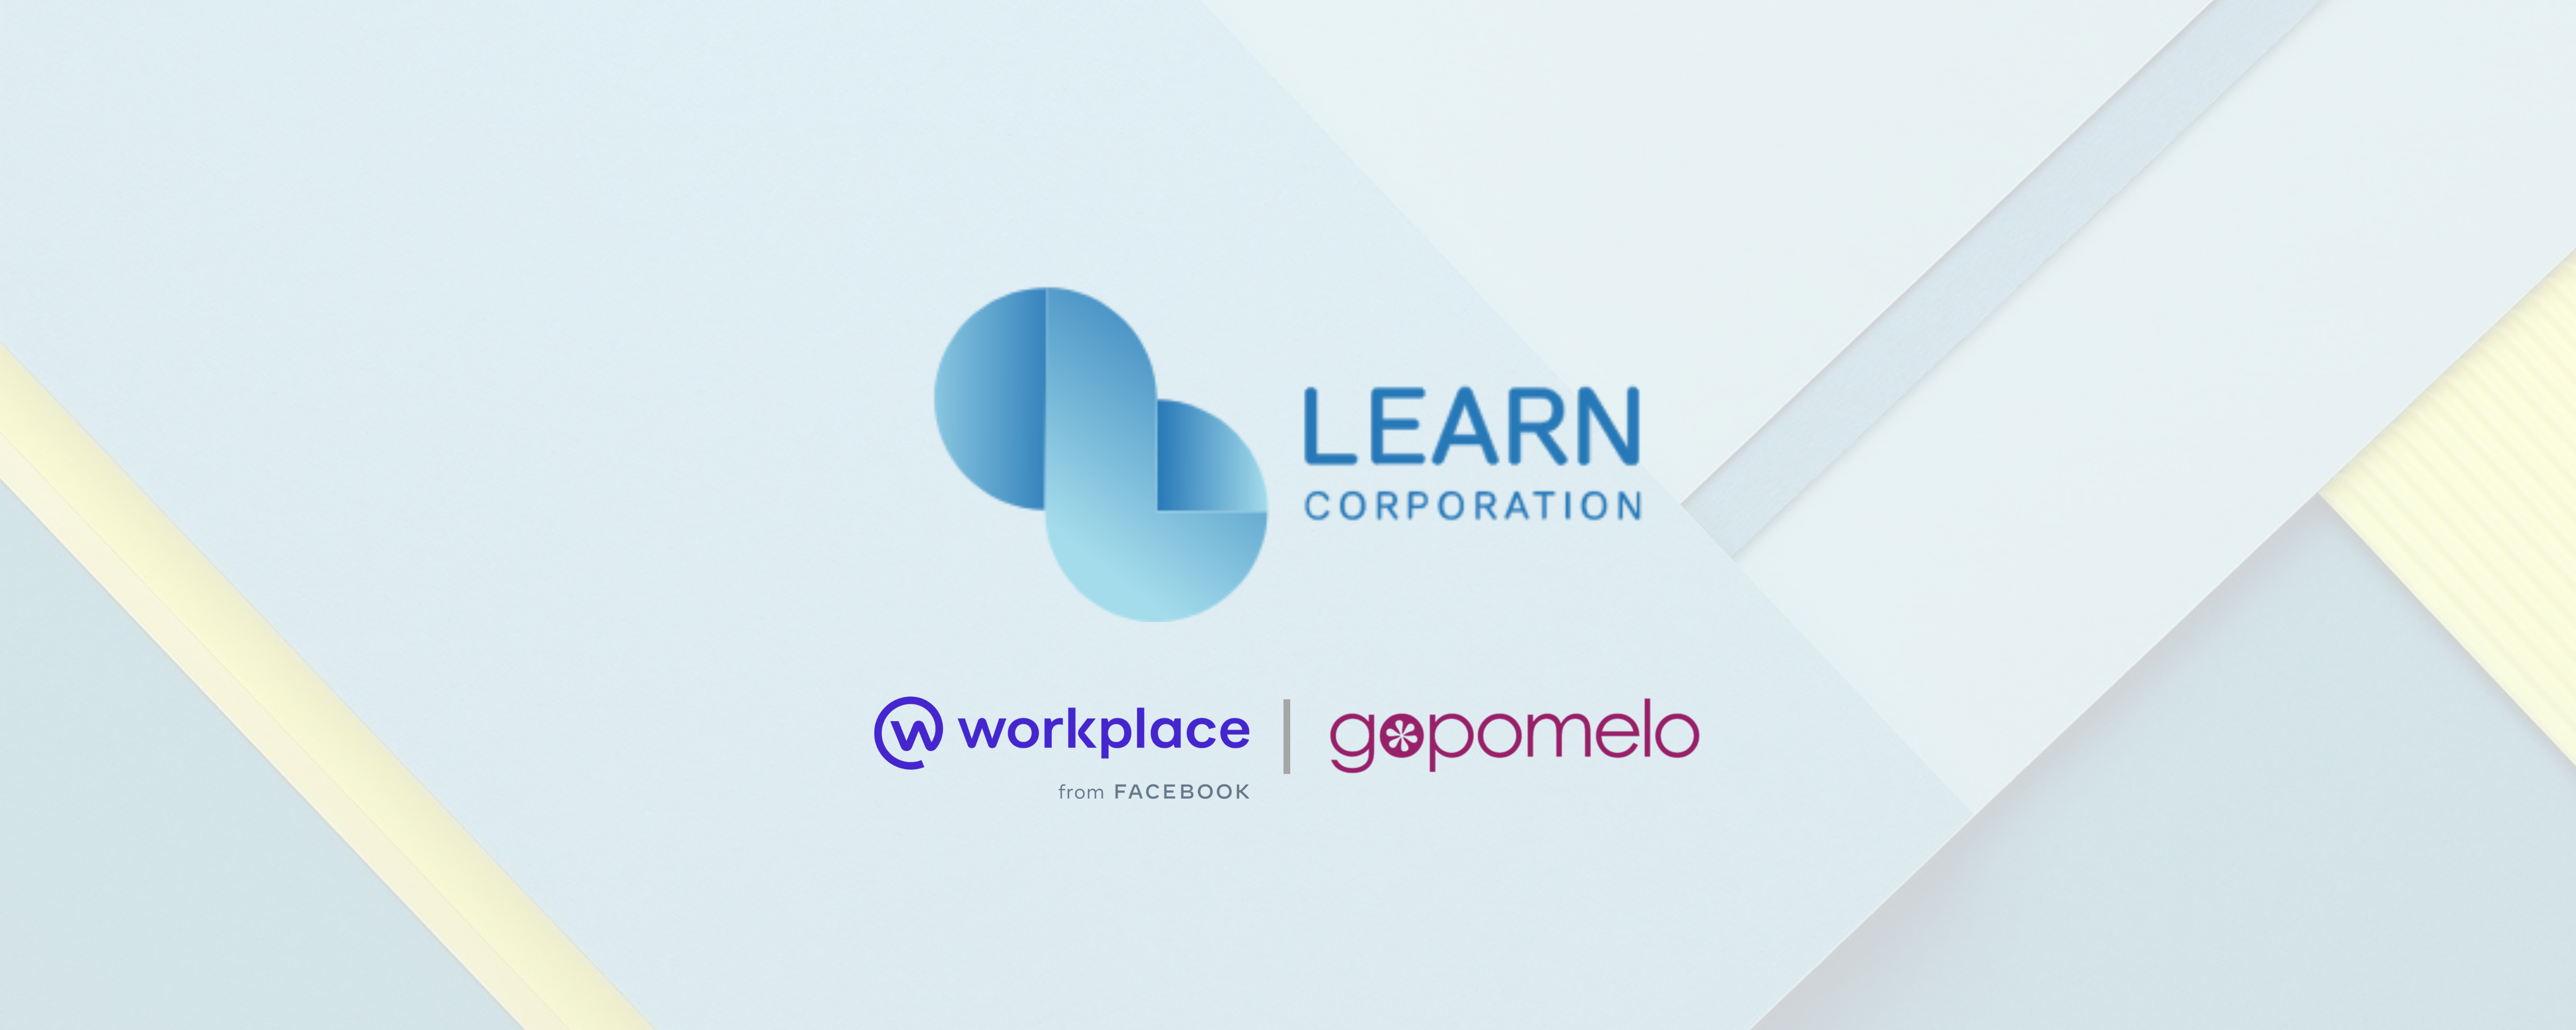 Workplace: บริษัท Learn Corporation กับการใช้งาน Workplace from Facebook ผ่านทาง GoPomelo